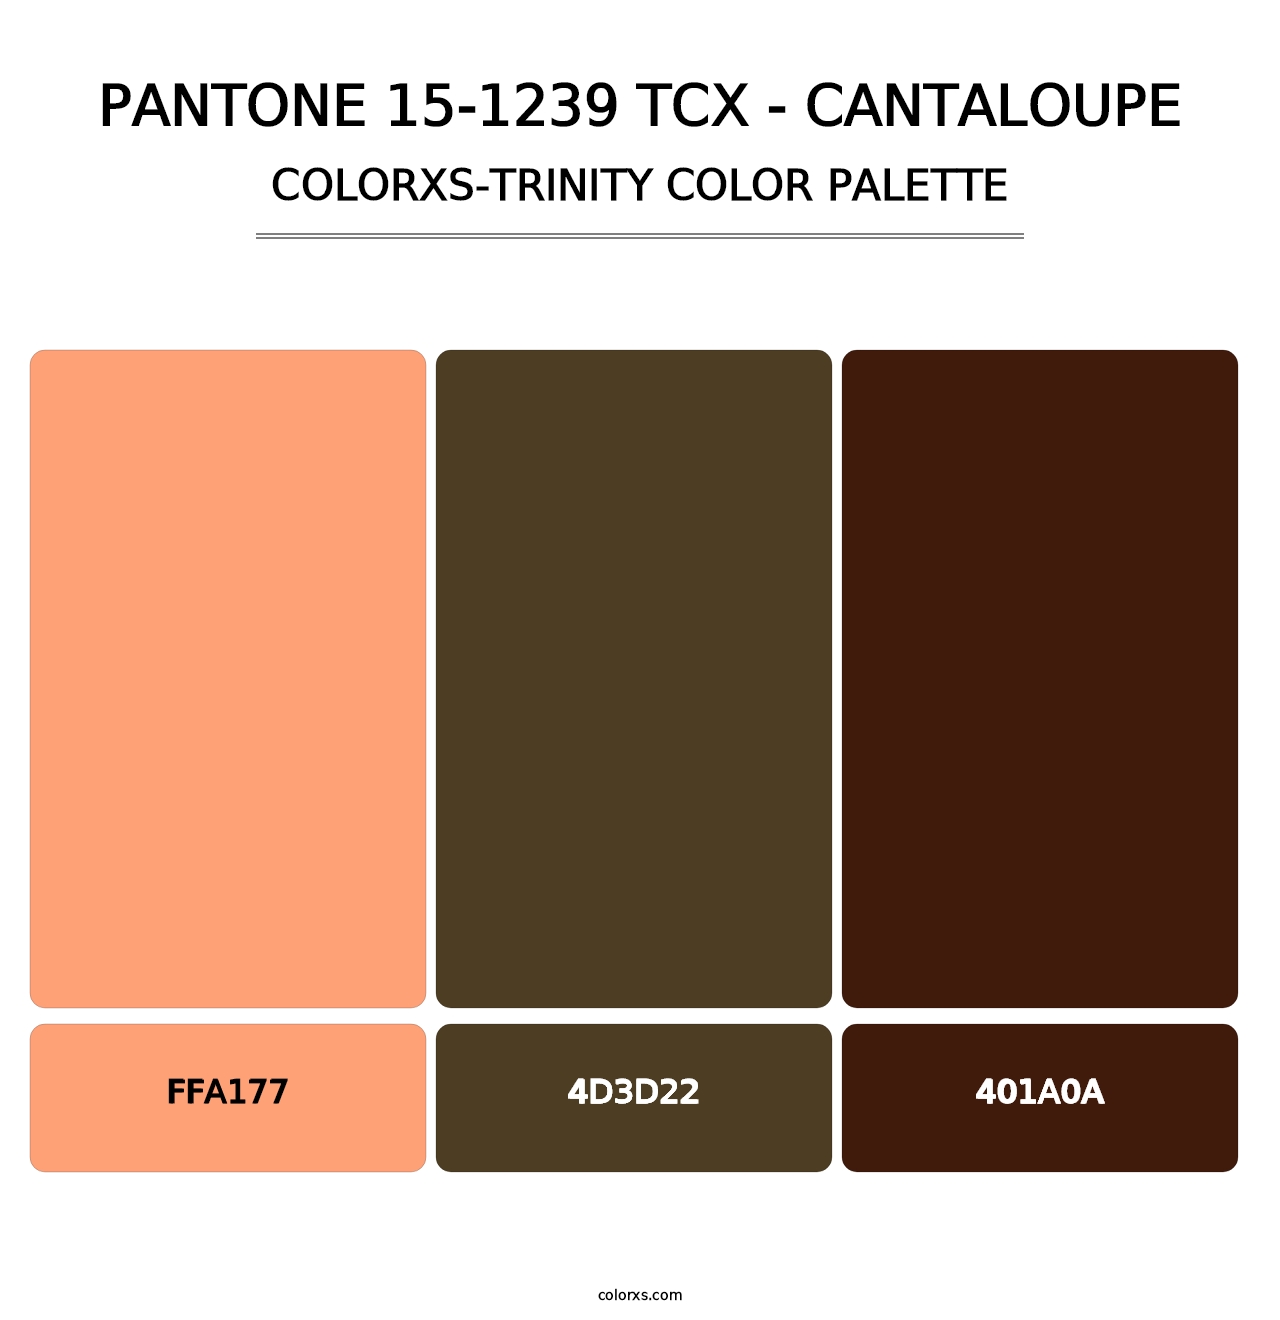 PANTONE 15-1239 TCX - Cantaloupe - Colorxs Trinity Palette